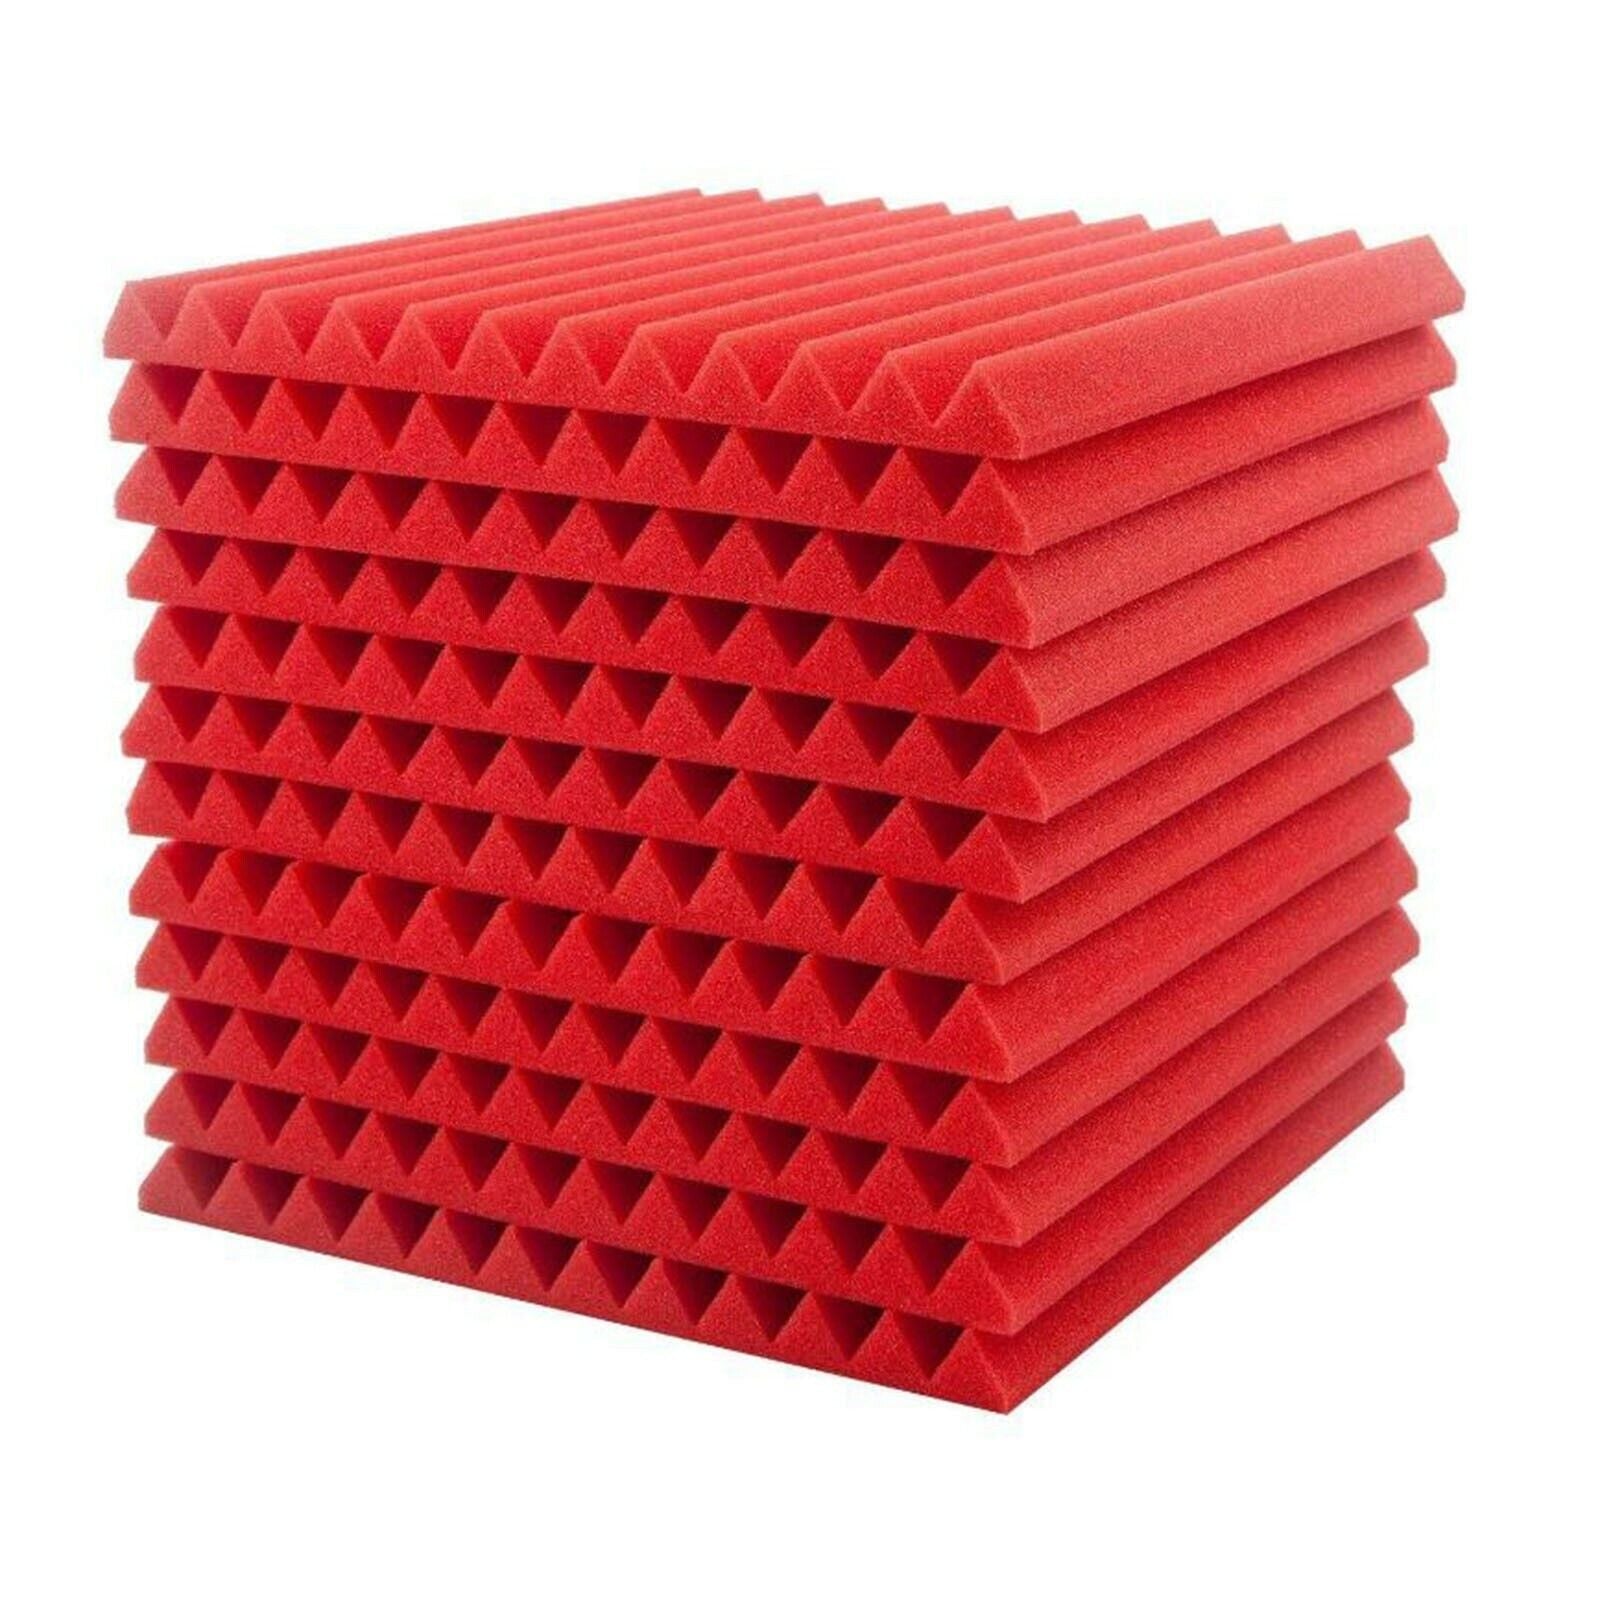 24 Pack Acoustic Foam Panels, 30x 30x 2.5cm Studio Soundproofing Wedges Fire Resistant Sound Proof Padding Acoustic Treatment Foam (Red) - Office Catch